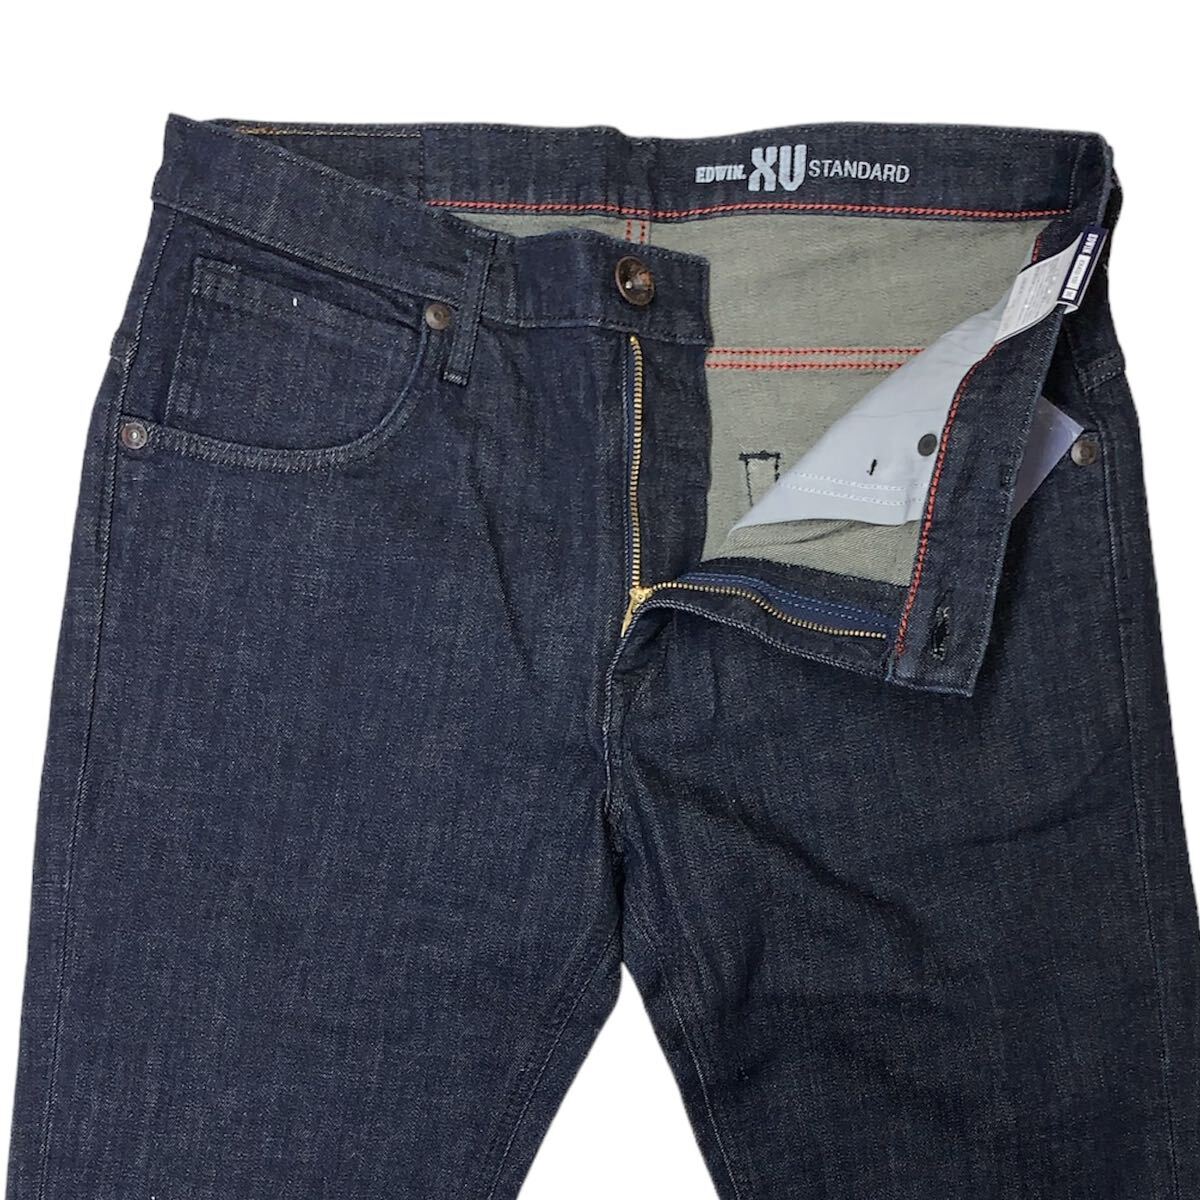  Edwin W36 402 XV tight Denim made in Japan EDWIN GENUINE QUALITY JEANS jeans Zip fly EX402-100